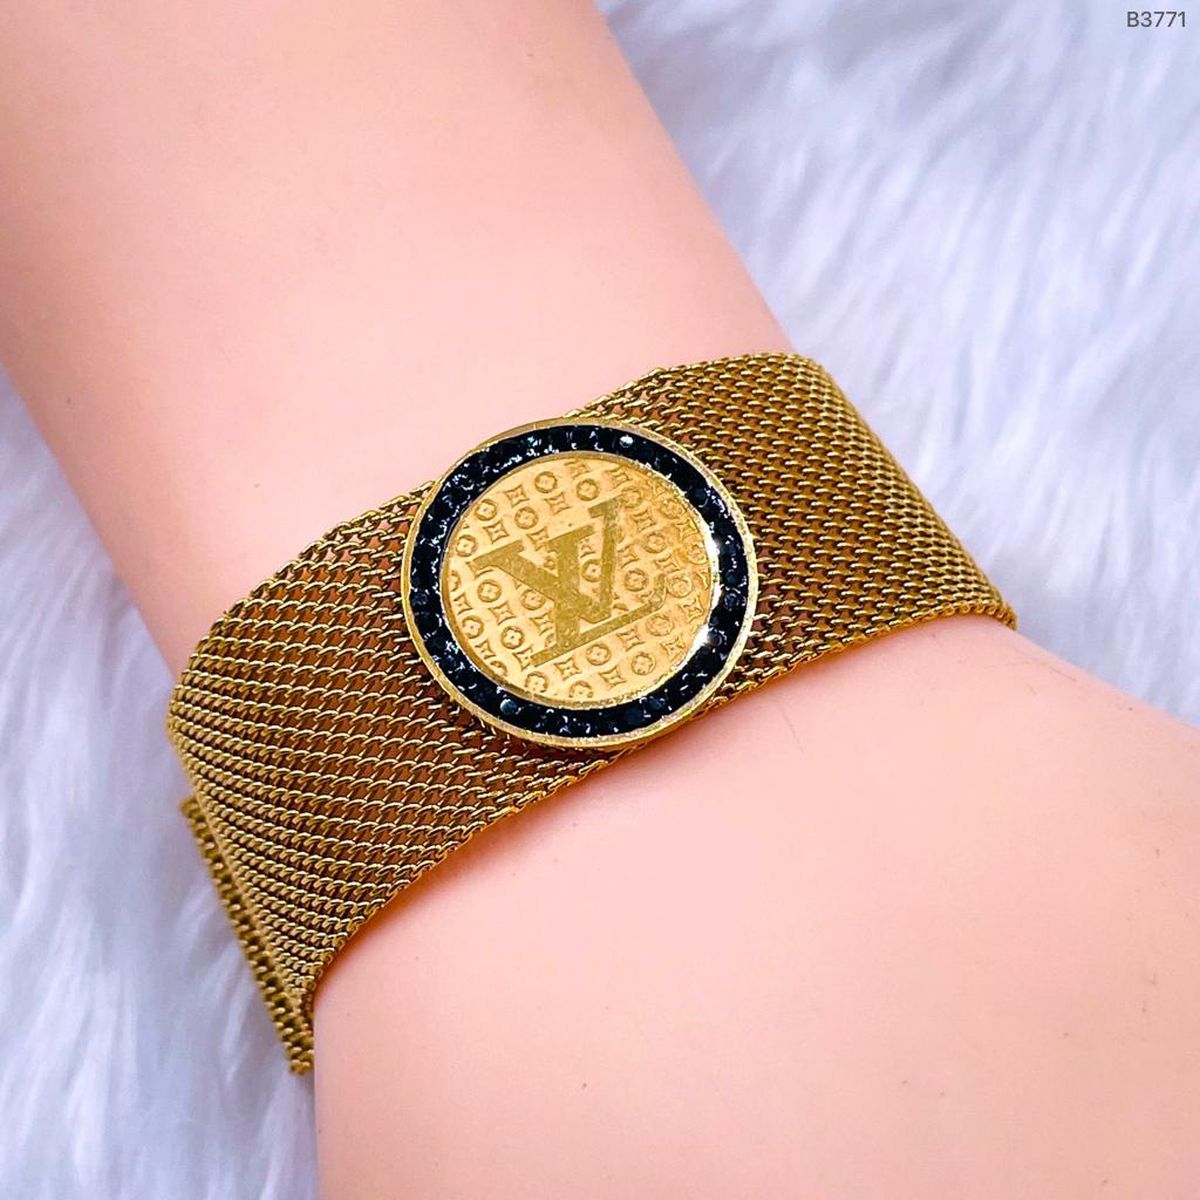 Lv Mother Of Pearl 18K Gold Stainless Steel Openable Kada Bracelet For Women